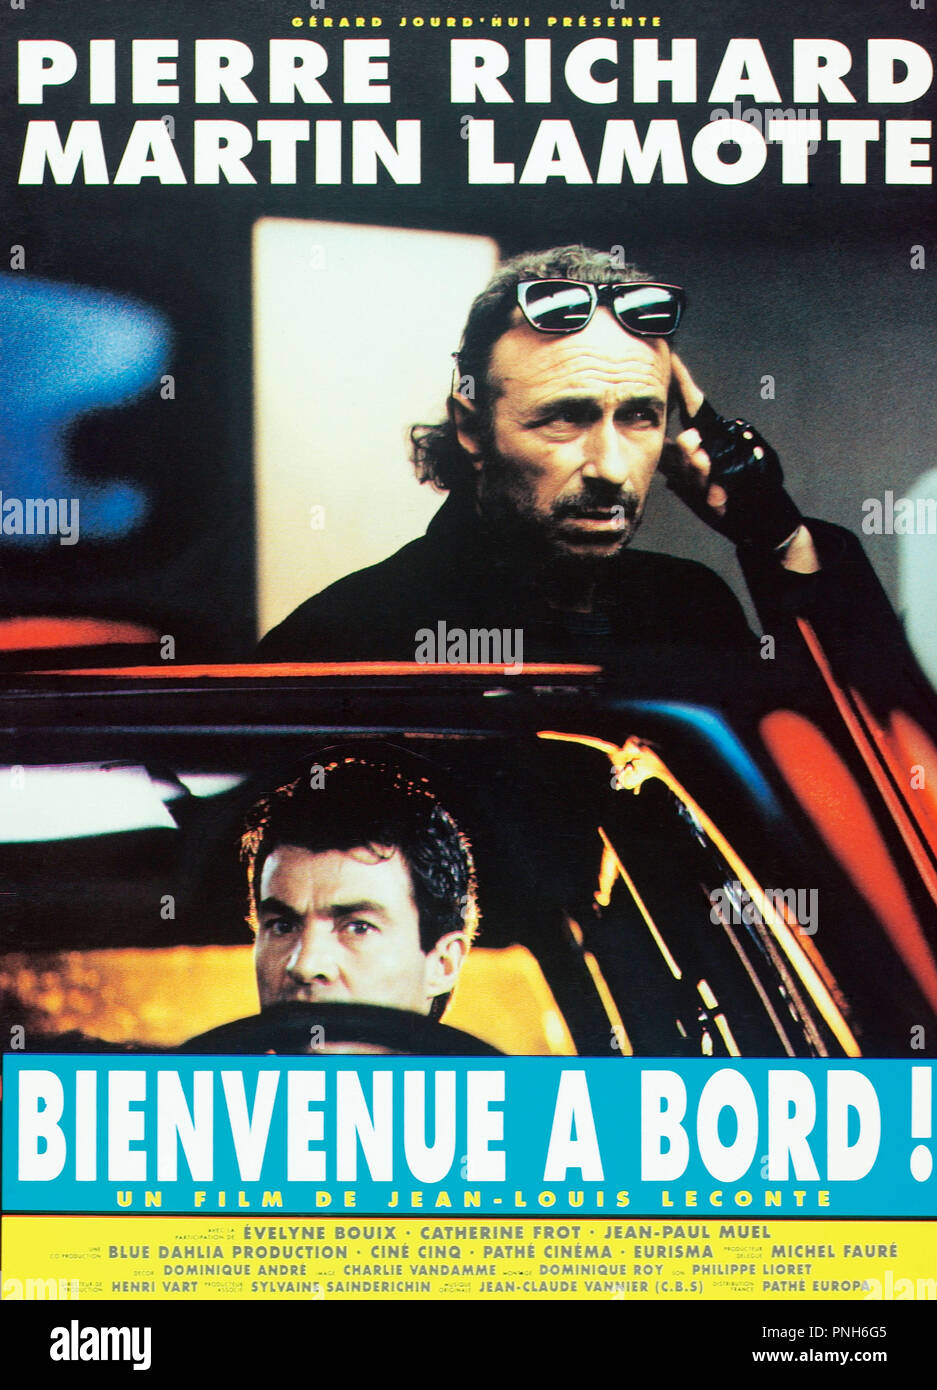 Original film title: BIENVENUE À BORD!. English title: BIENVENUE À BORD!.  Year: 1990. Director: JEAN-LOUIS LECONTE Stock Photo - Alamy